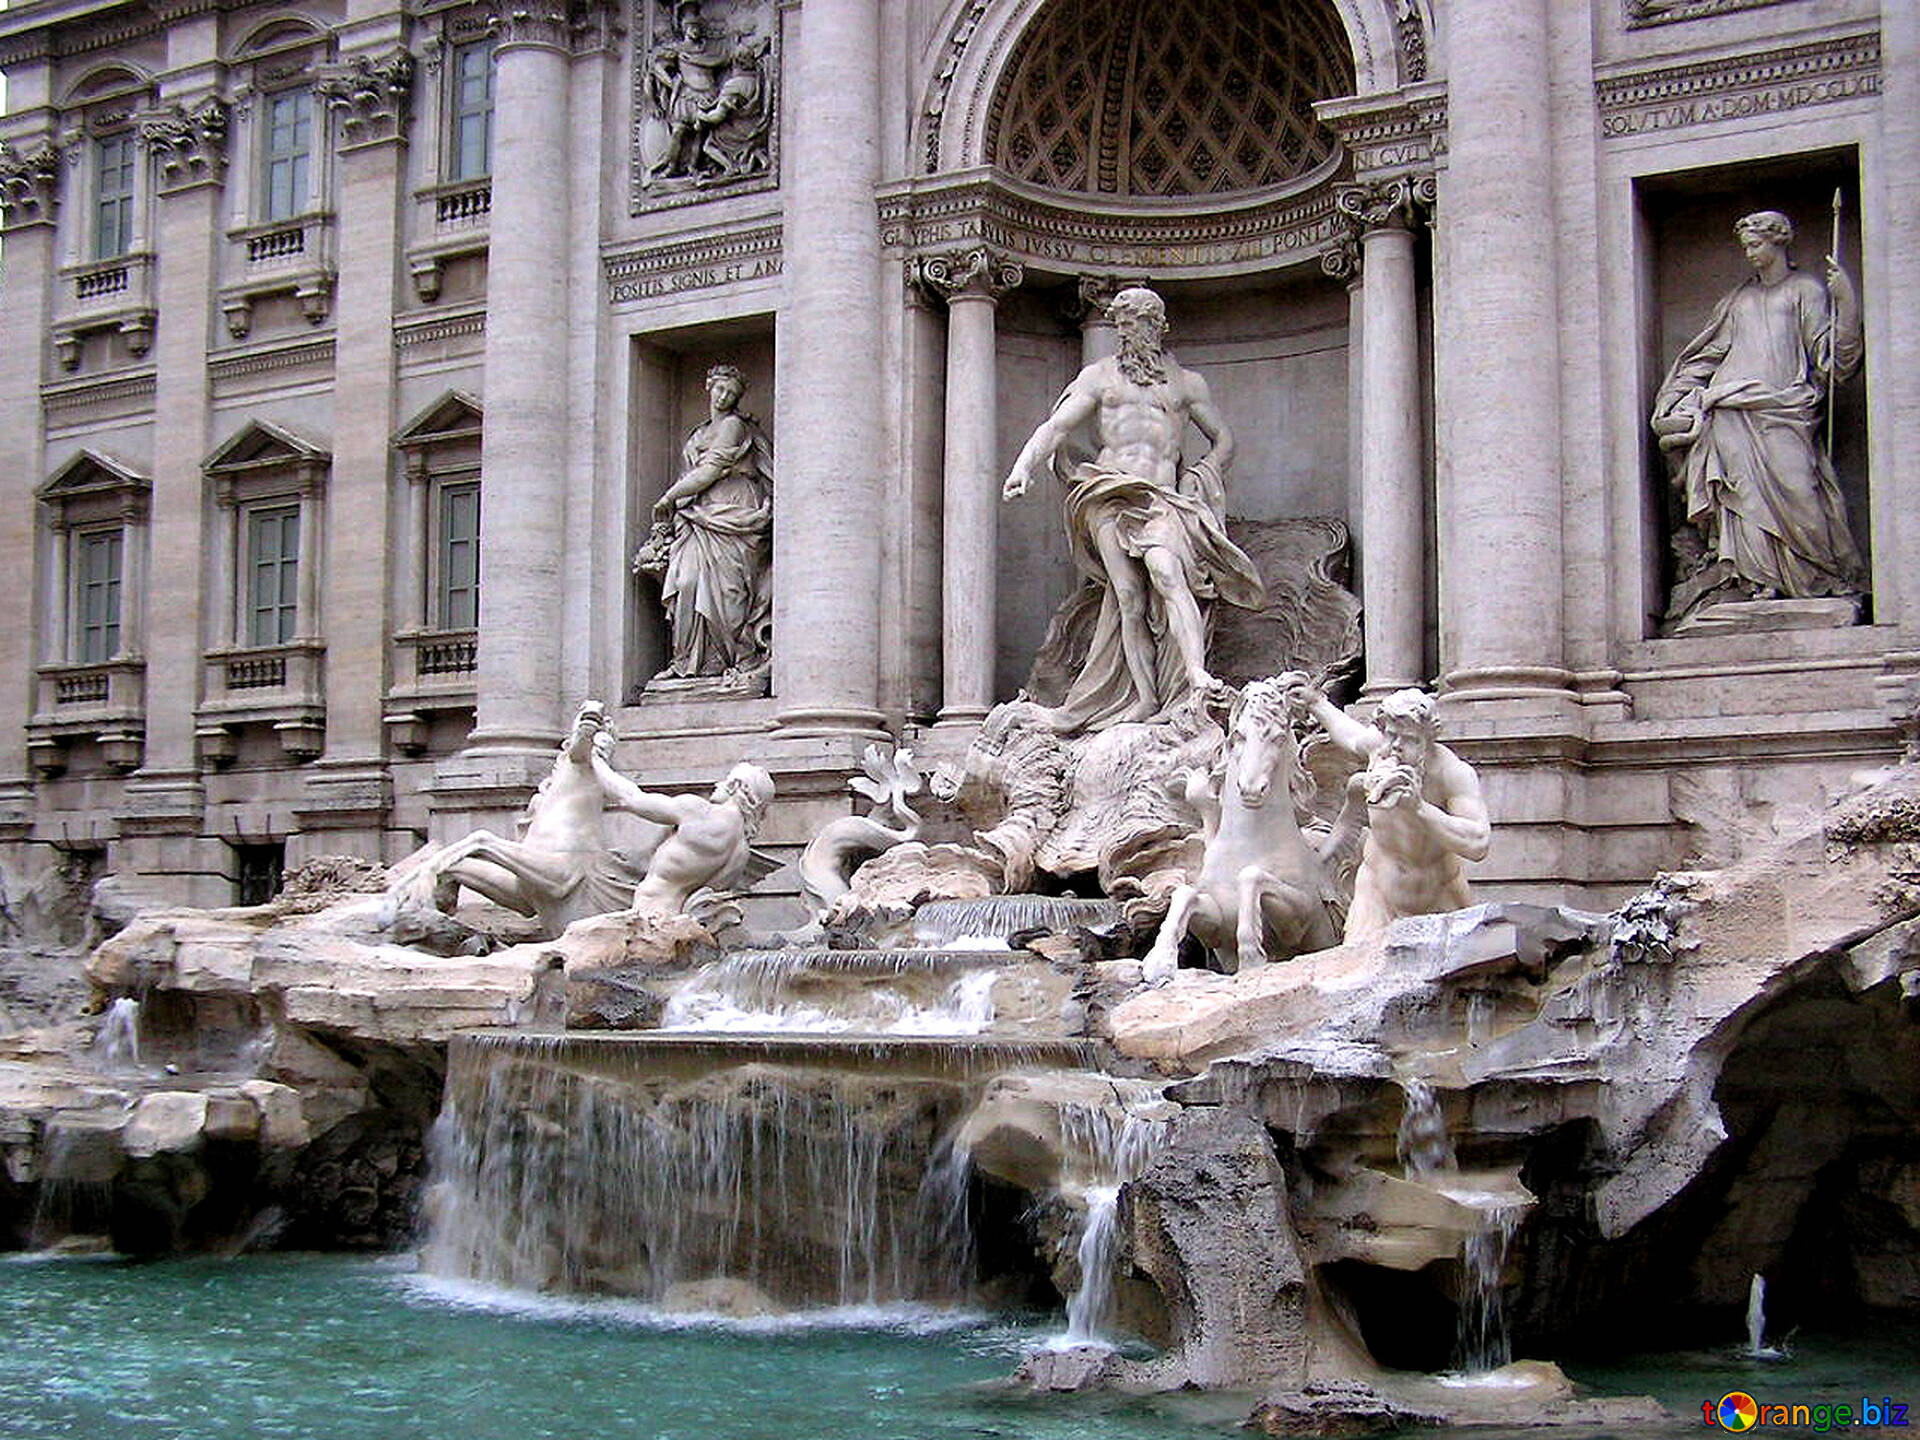 Roman Fountains Image Rome Trevi Fountain Fontana Di Trevi Image Fountains № 317. Torange.biz Free Pics On Cc By License